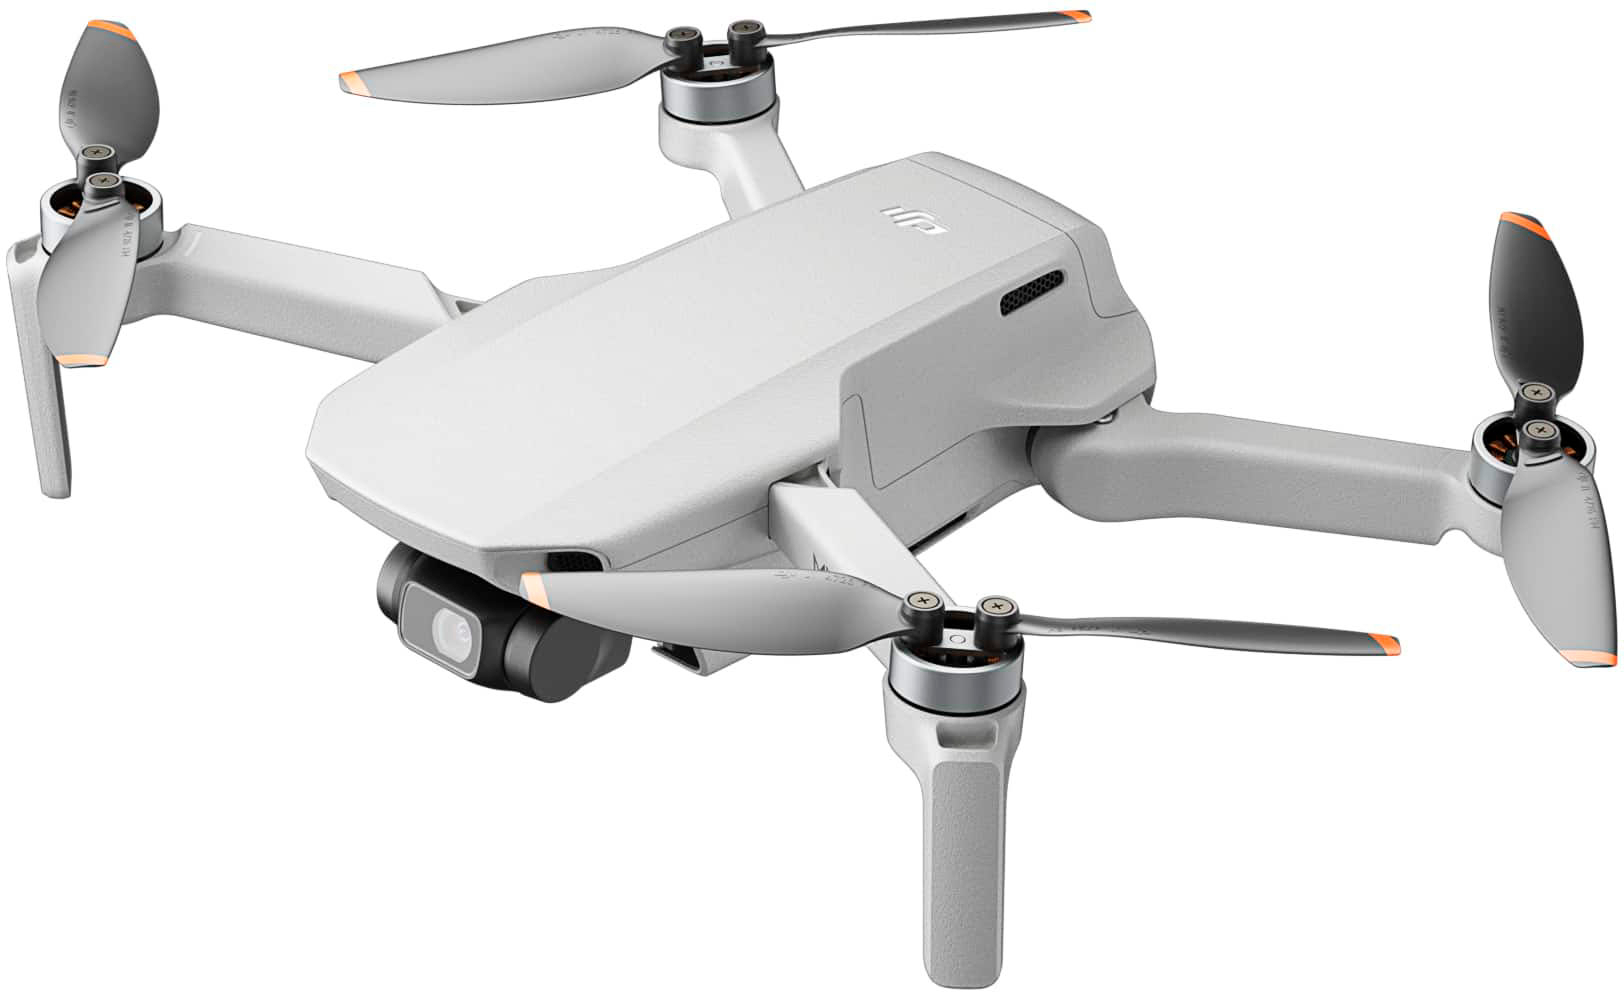  DJI Mini 2 Fly More Combo – Ultralight Foldable Drone